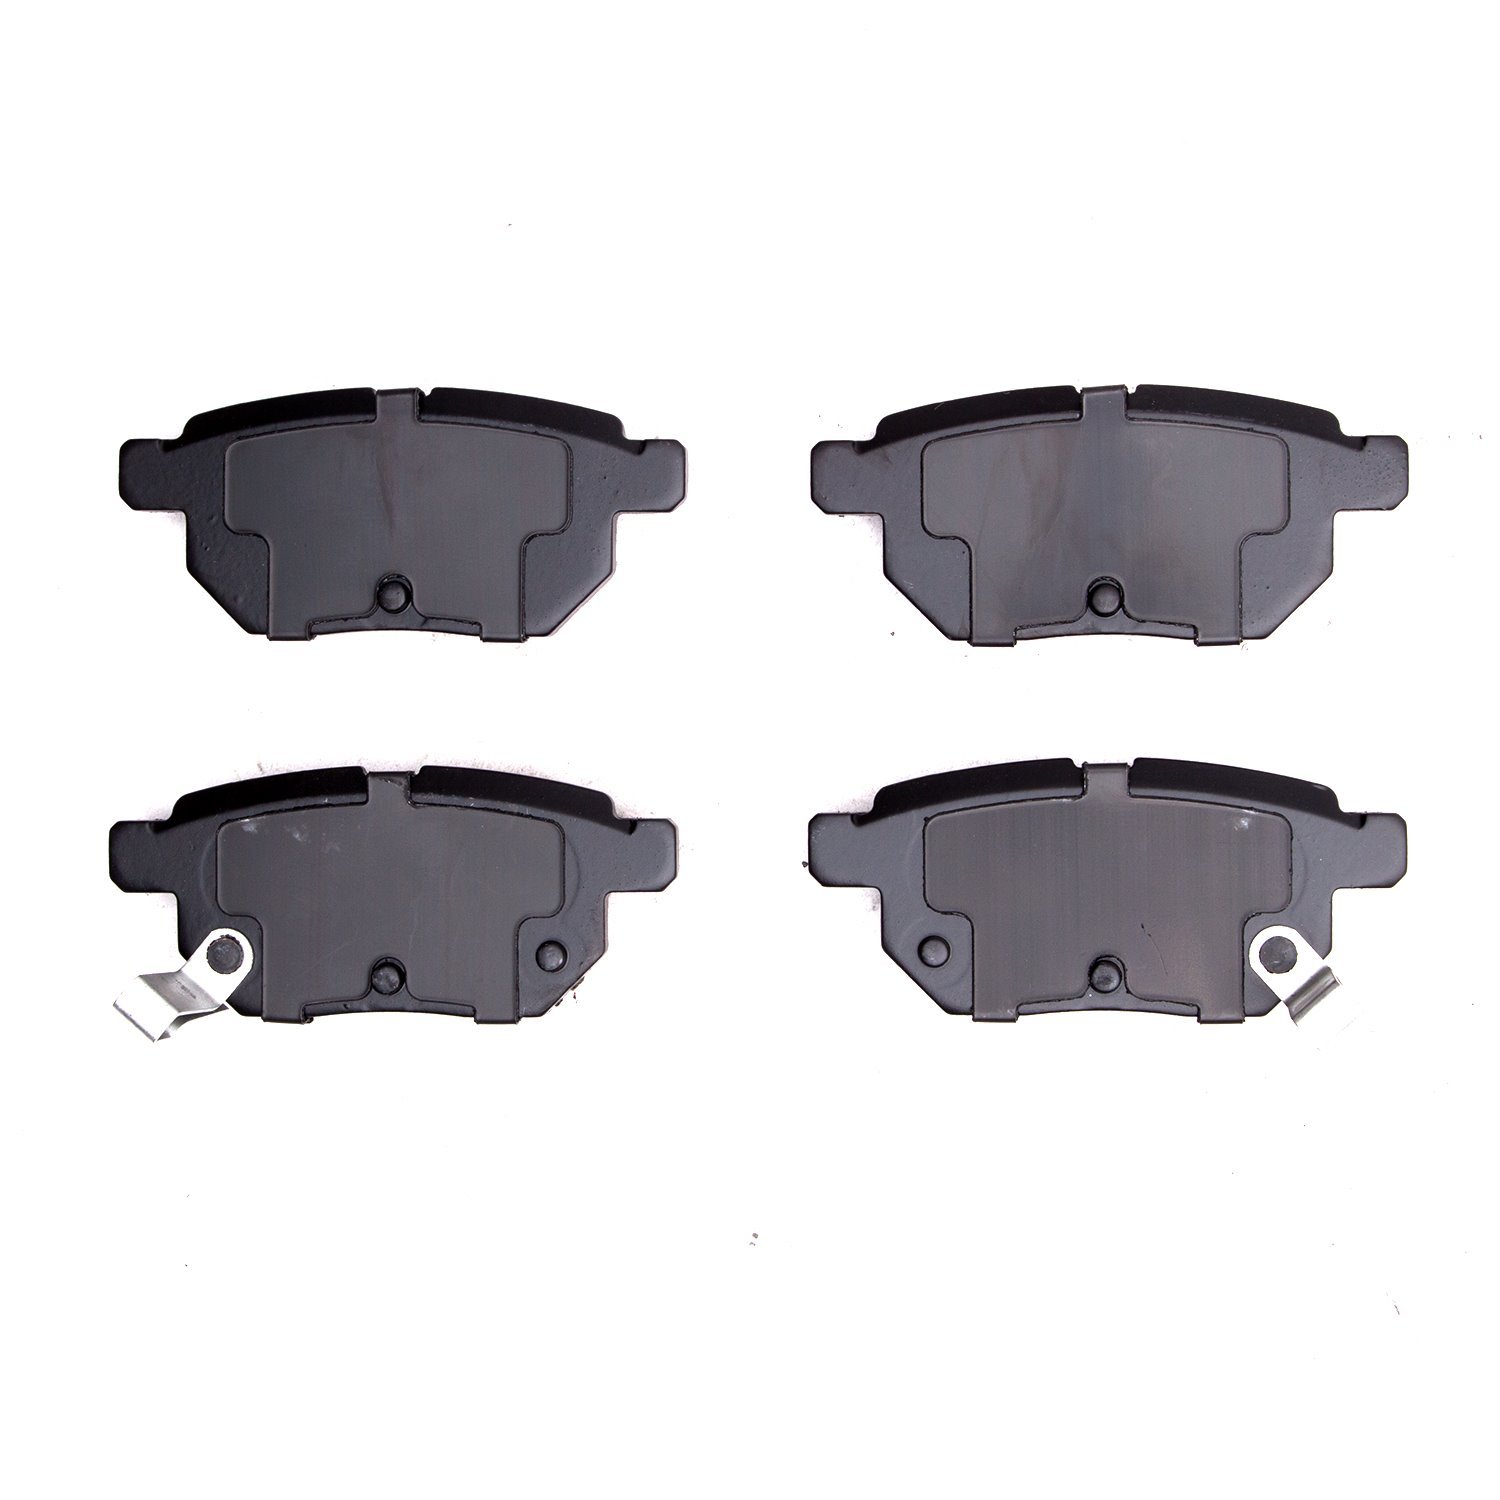 1551-1423-00 5000 Advanced Ceramic Brake Pads, Fits Select Multiple Makes/Models, Position: Rear